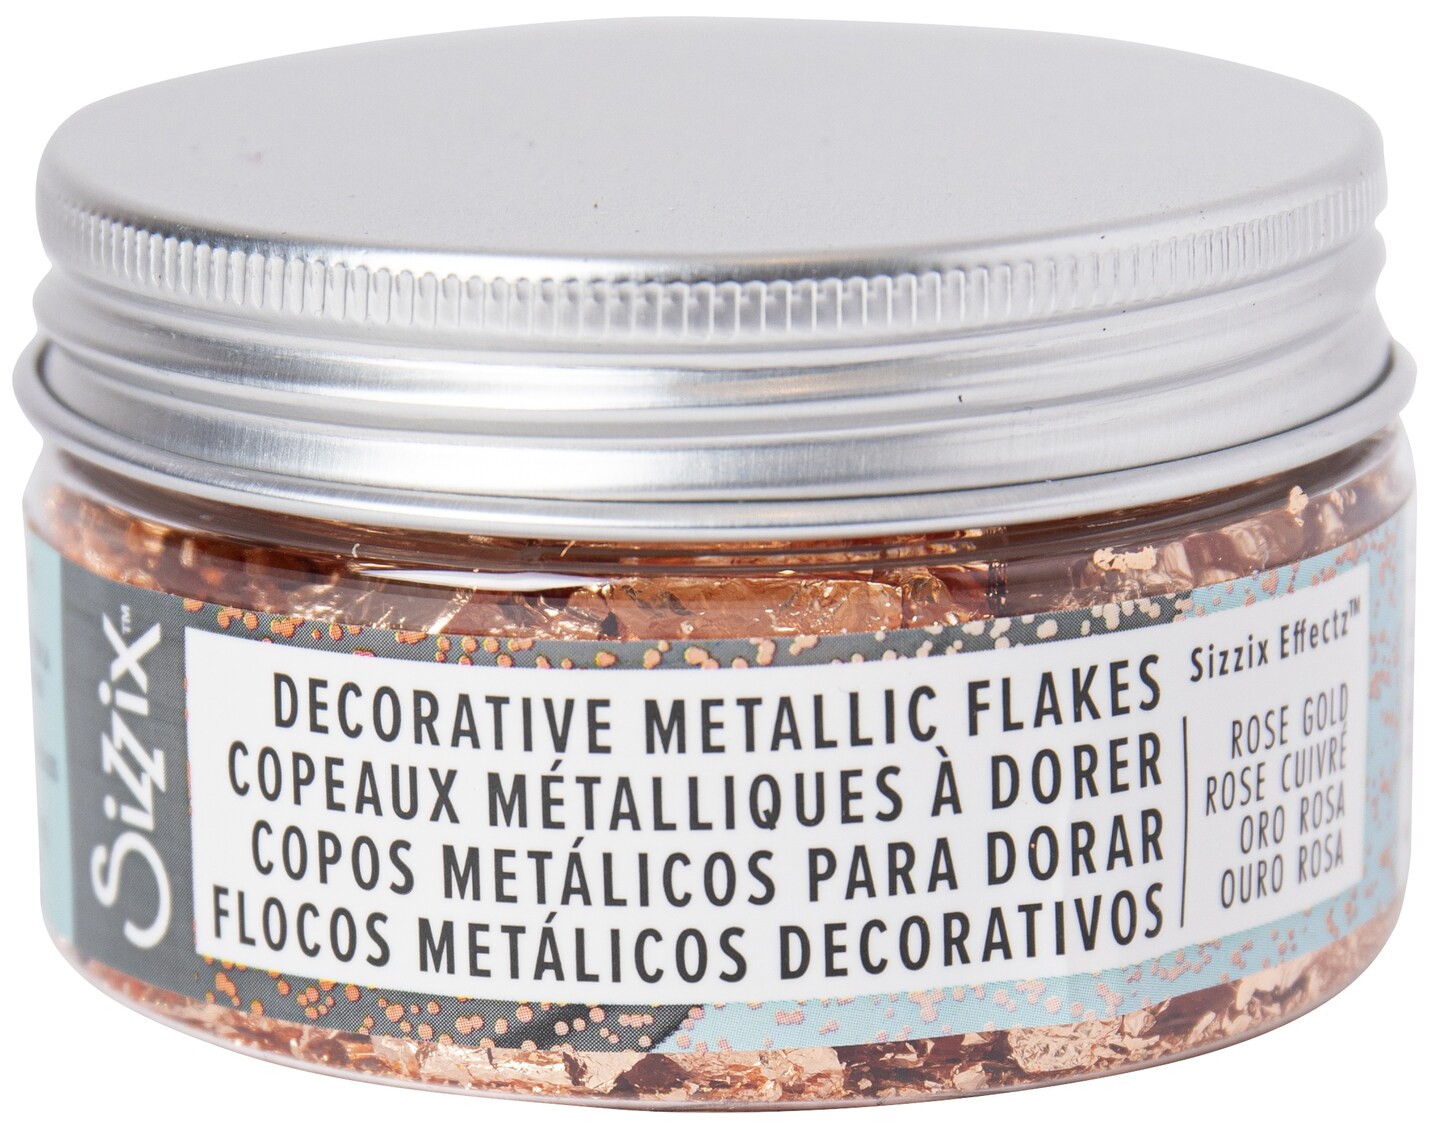 Sizzix Effectz Decorative Metallic Flakes 100ml-Rose Gold